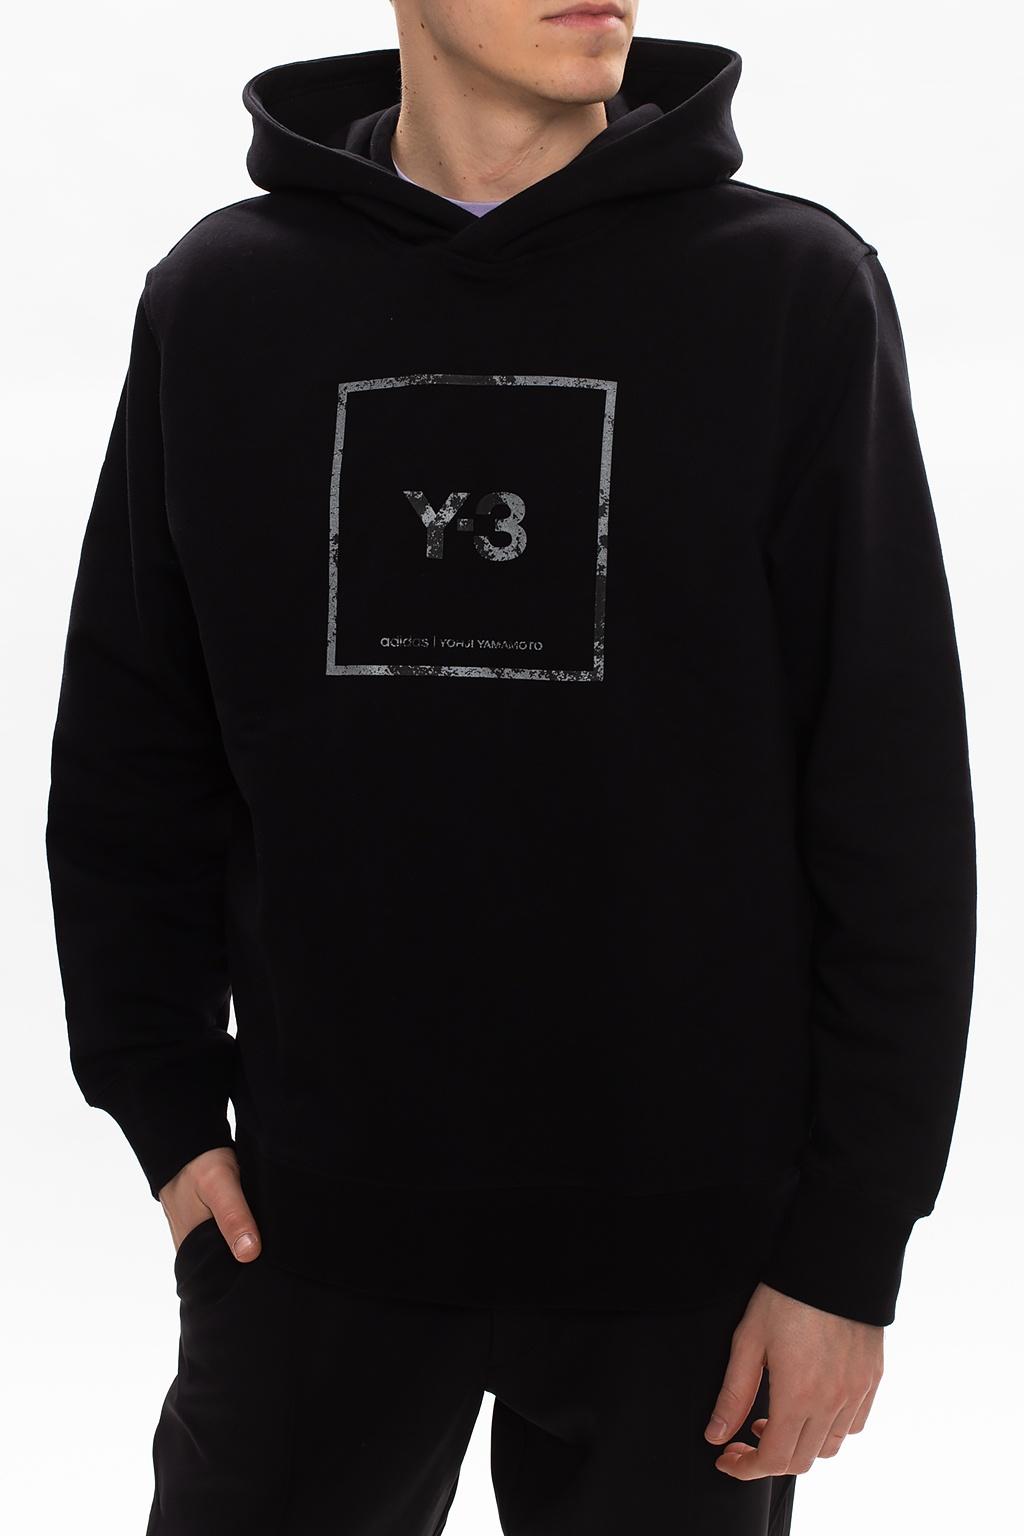 Y-3 Cotton Logo Hoodie in Black for Men - Lyst